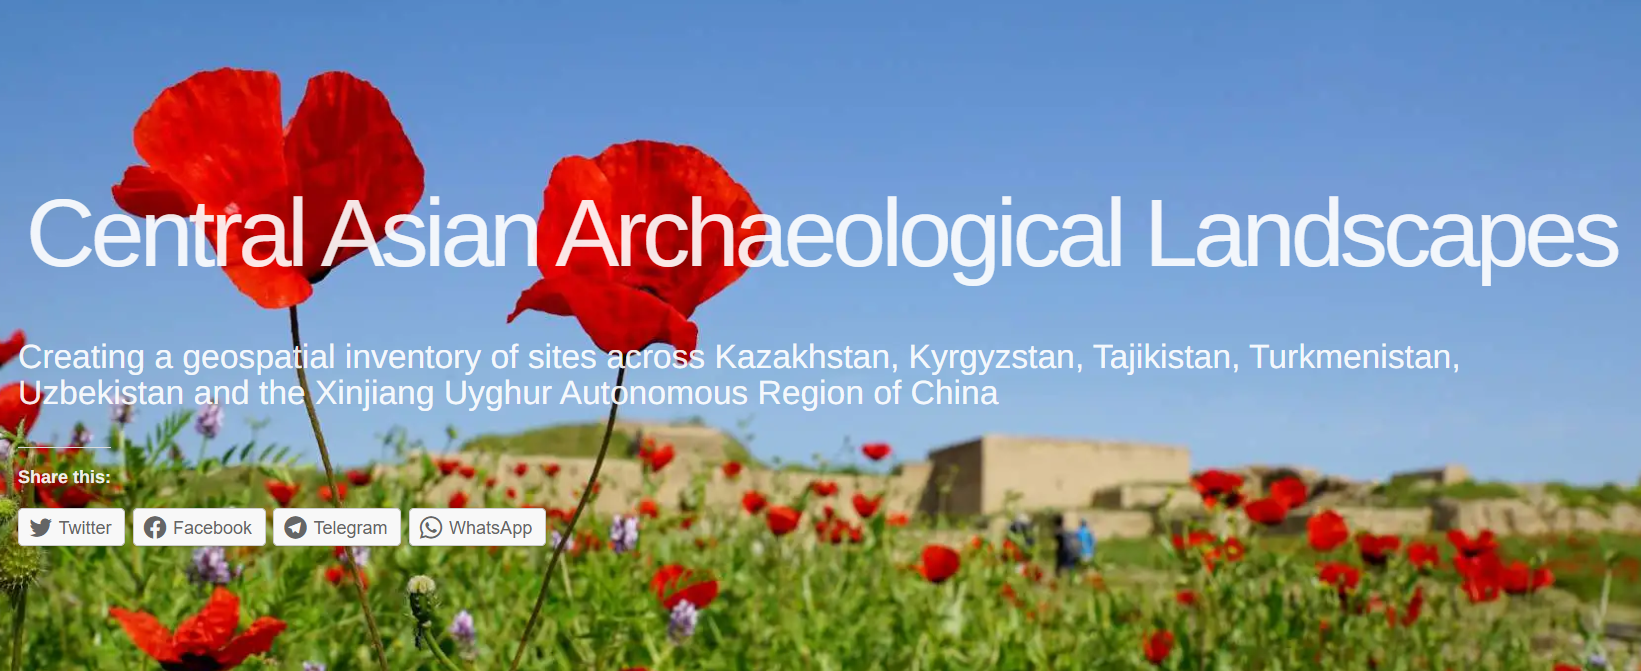 Central Asian Archaeological Landscapes